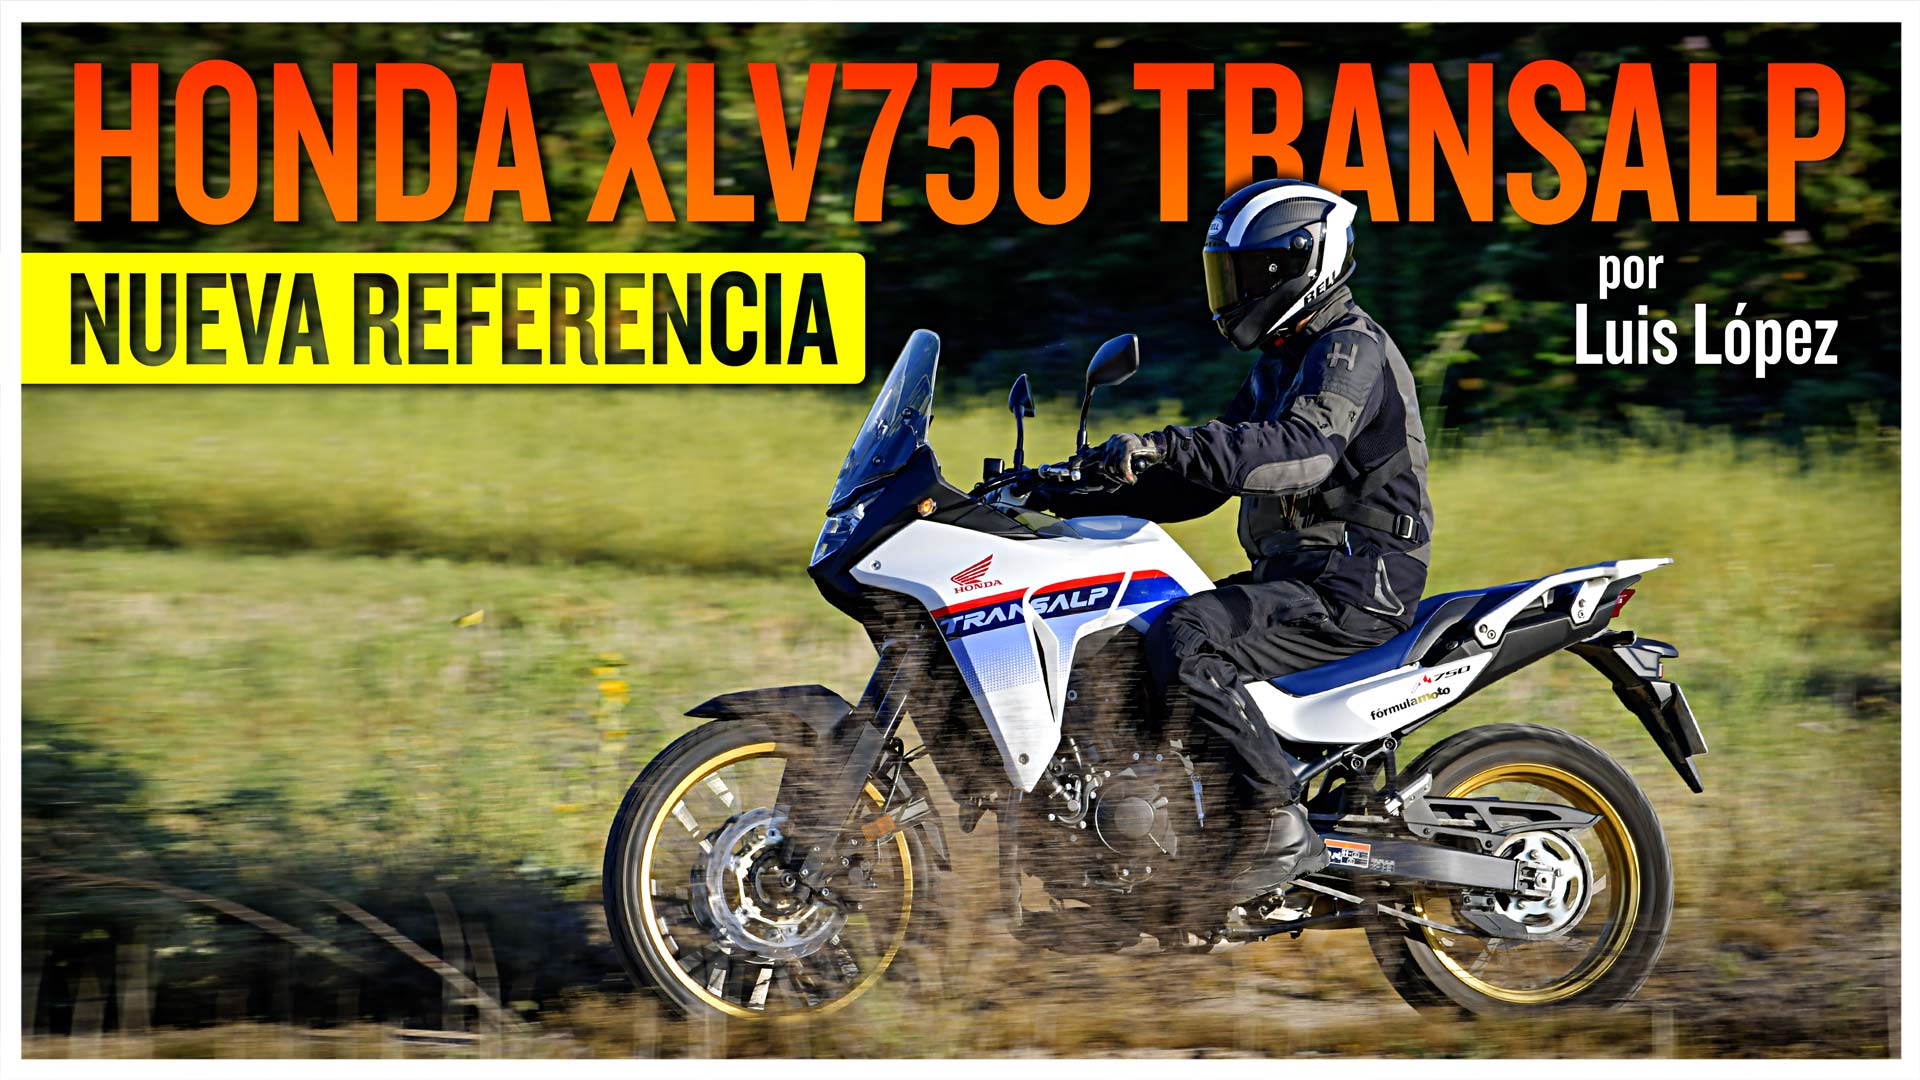 Honda XLV750 Transalp miniatura OK